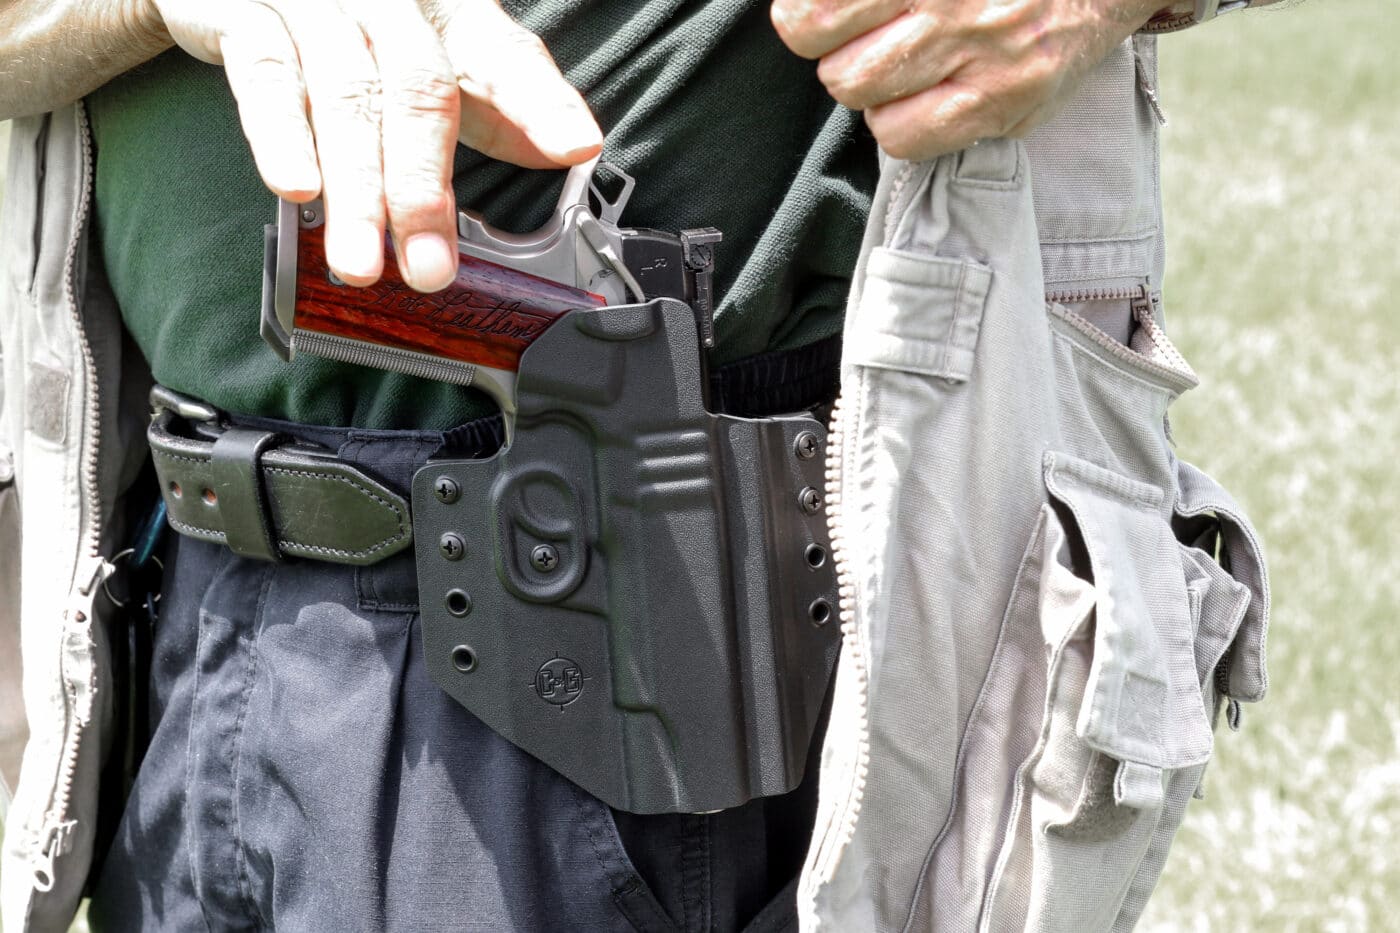 Ayoob demonstrating cross draw of pistol from holster